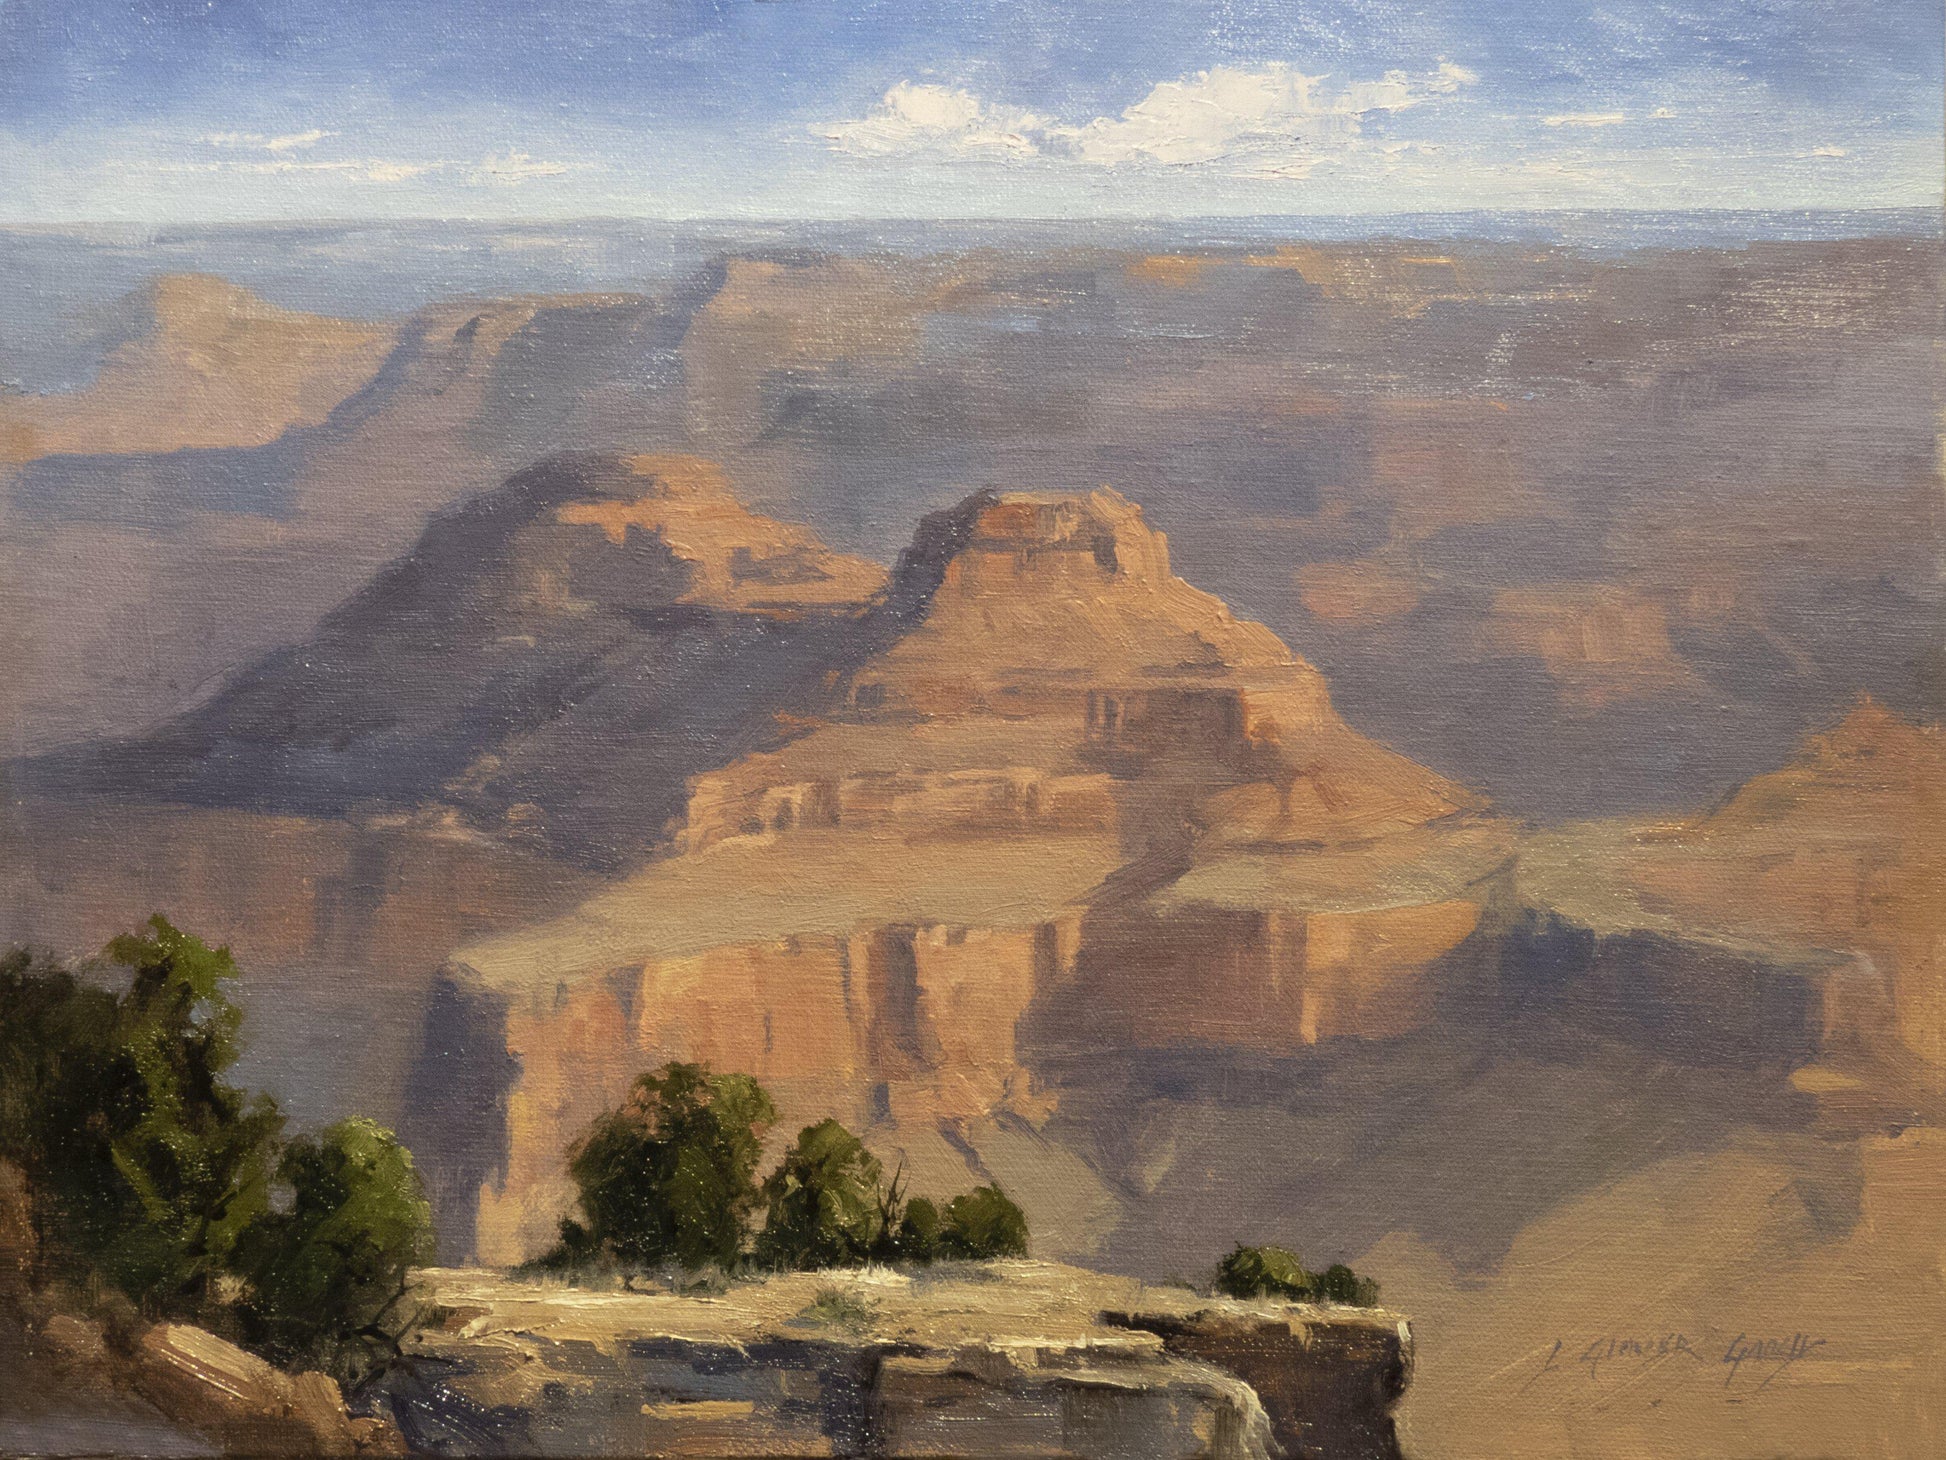 Along the Canyon Rim-Painting-Linda Glover Gooch-Sorrel Sky Gallery